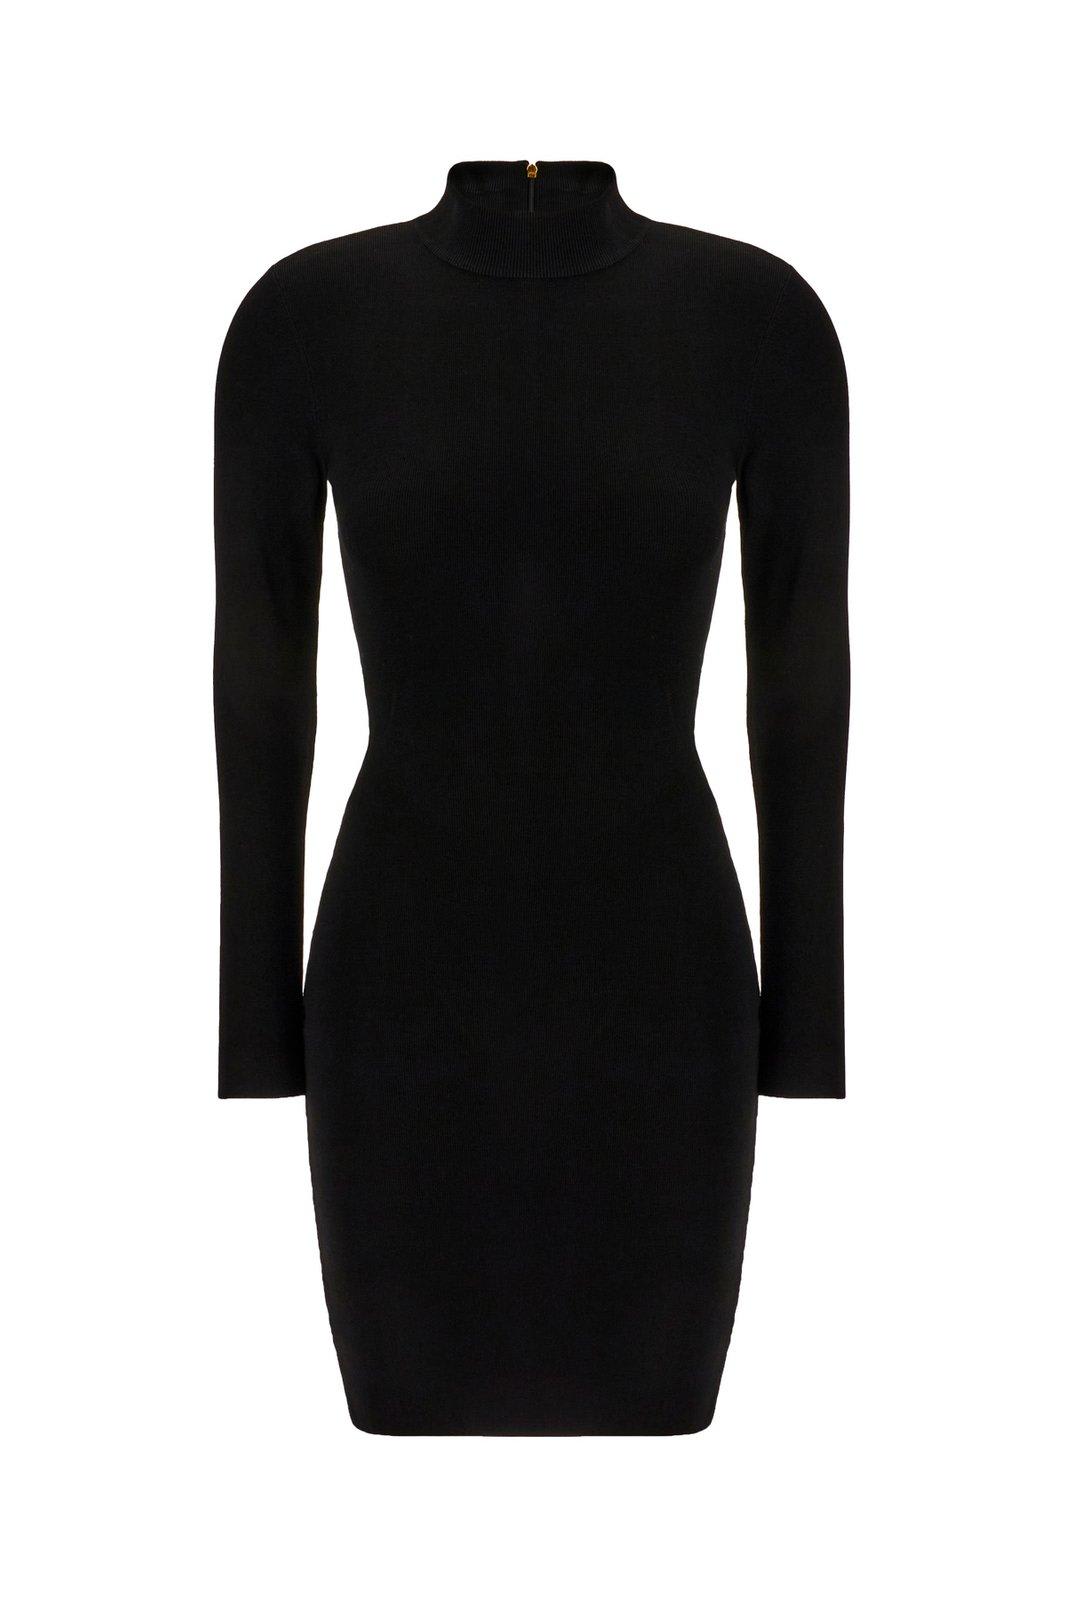 Michael Kors Stretch Knit Cutout Dress In Black